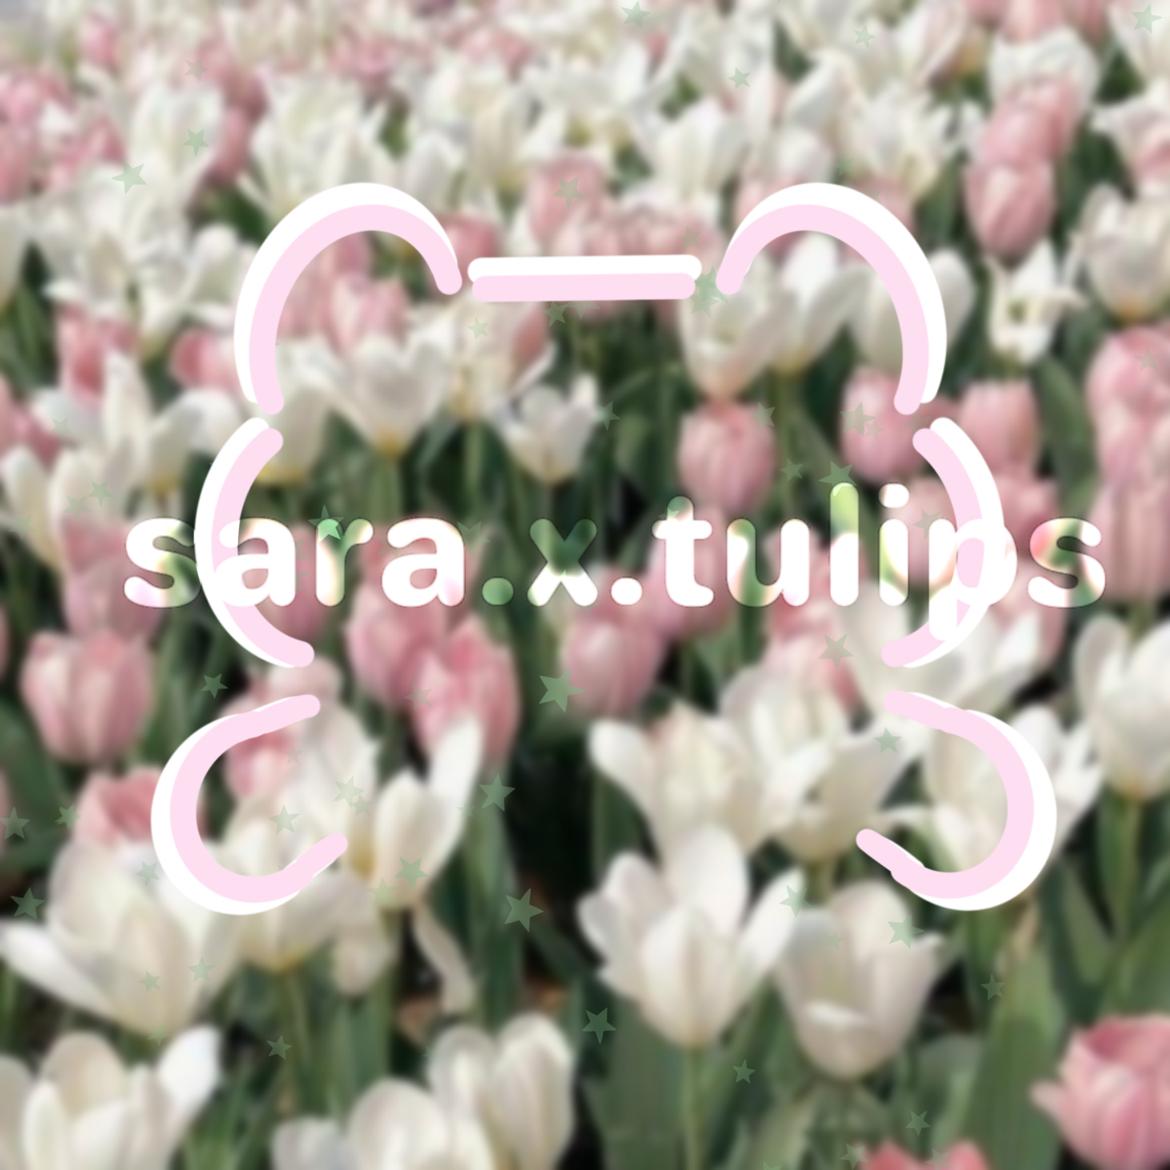 sara.x.tulips's images